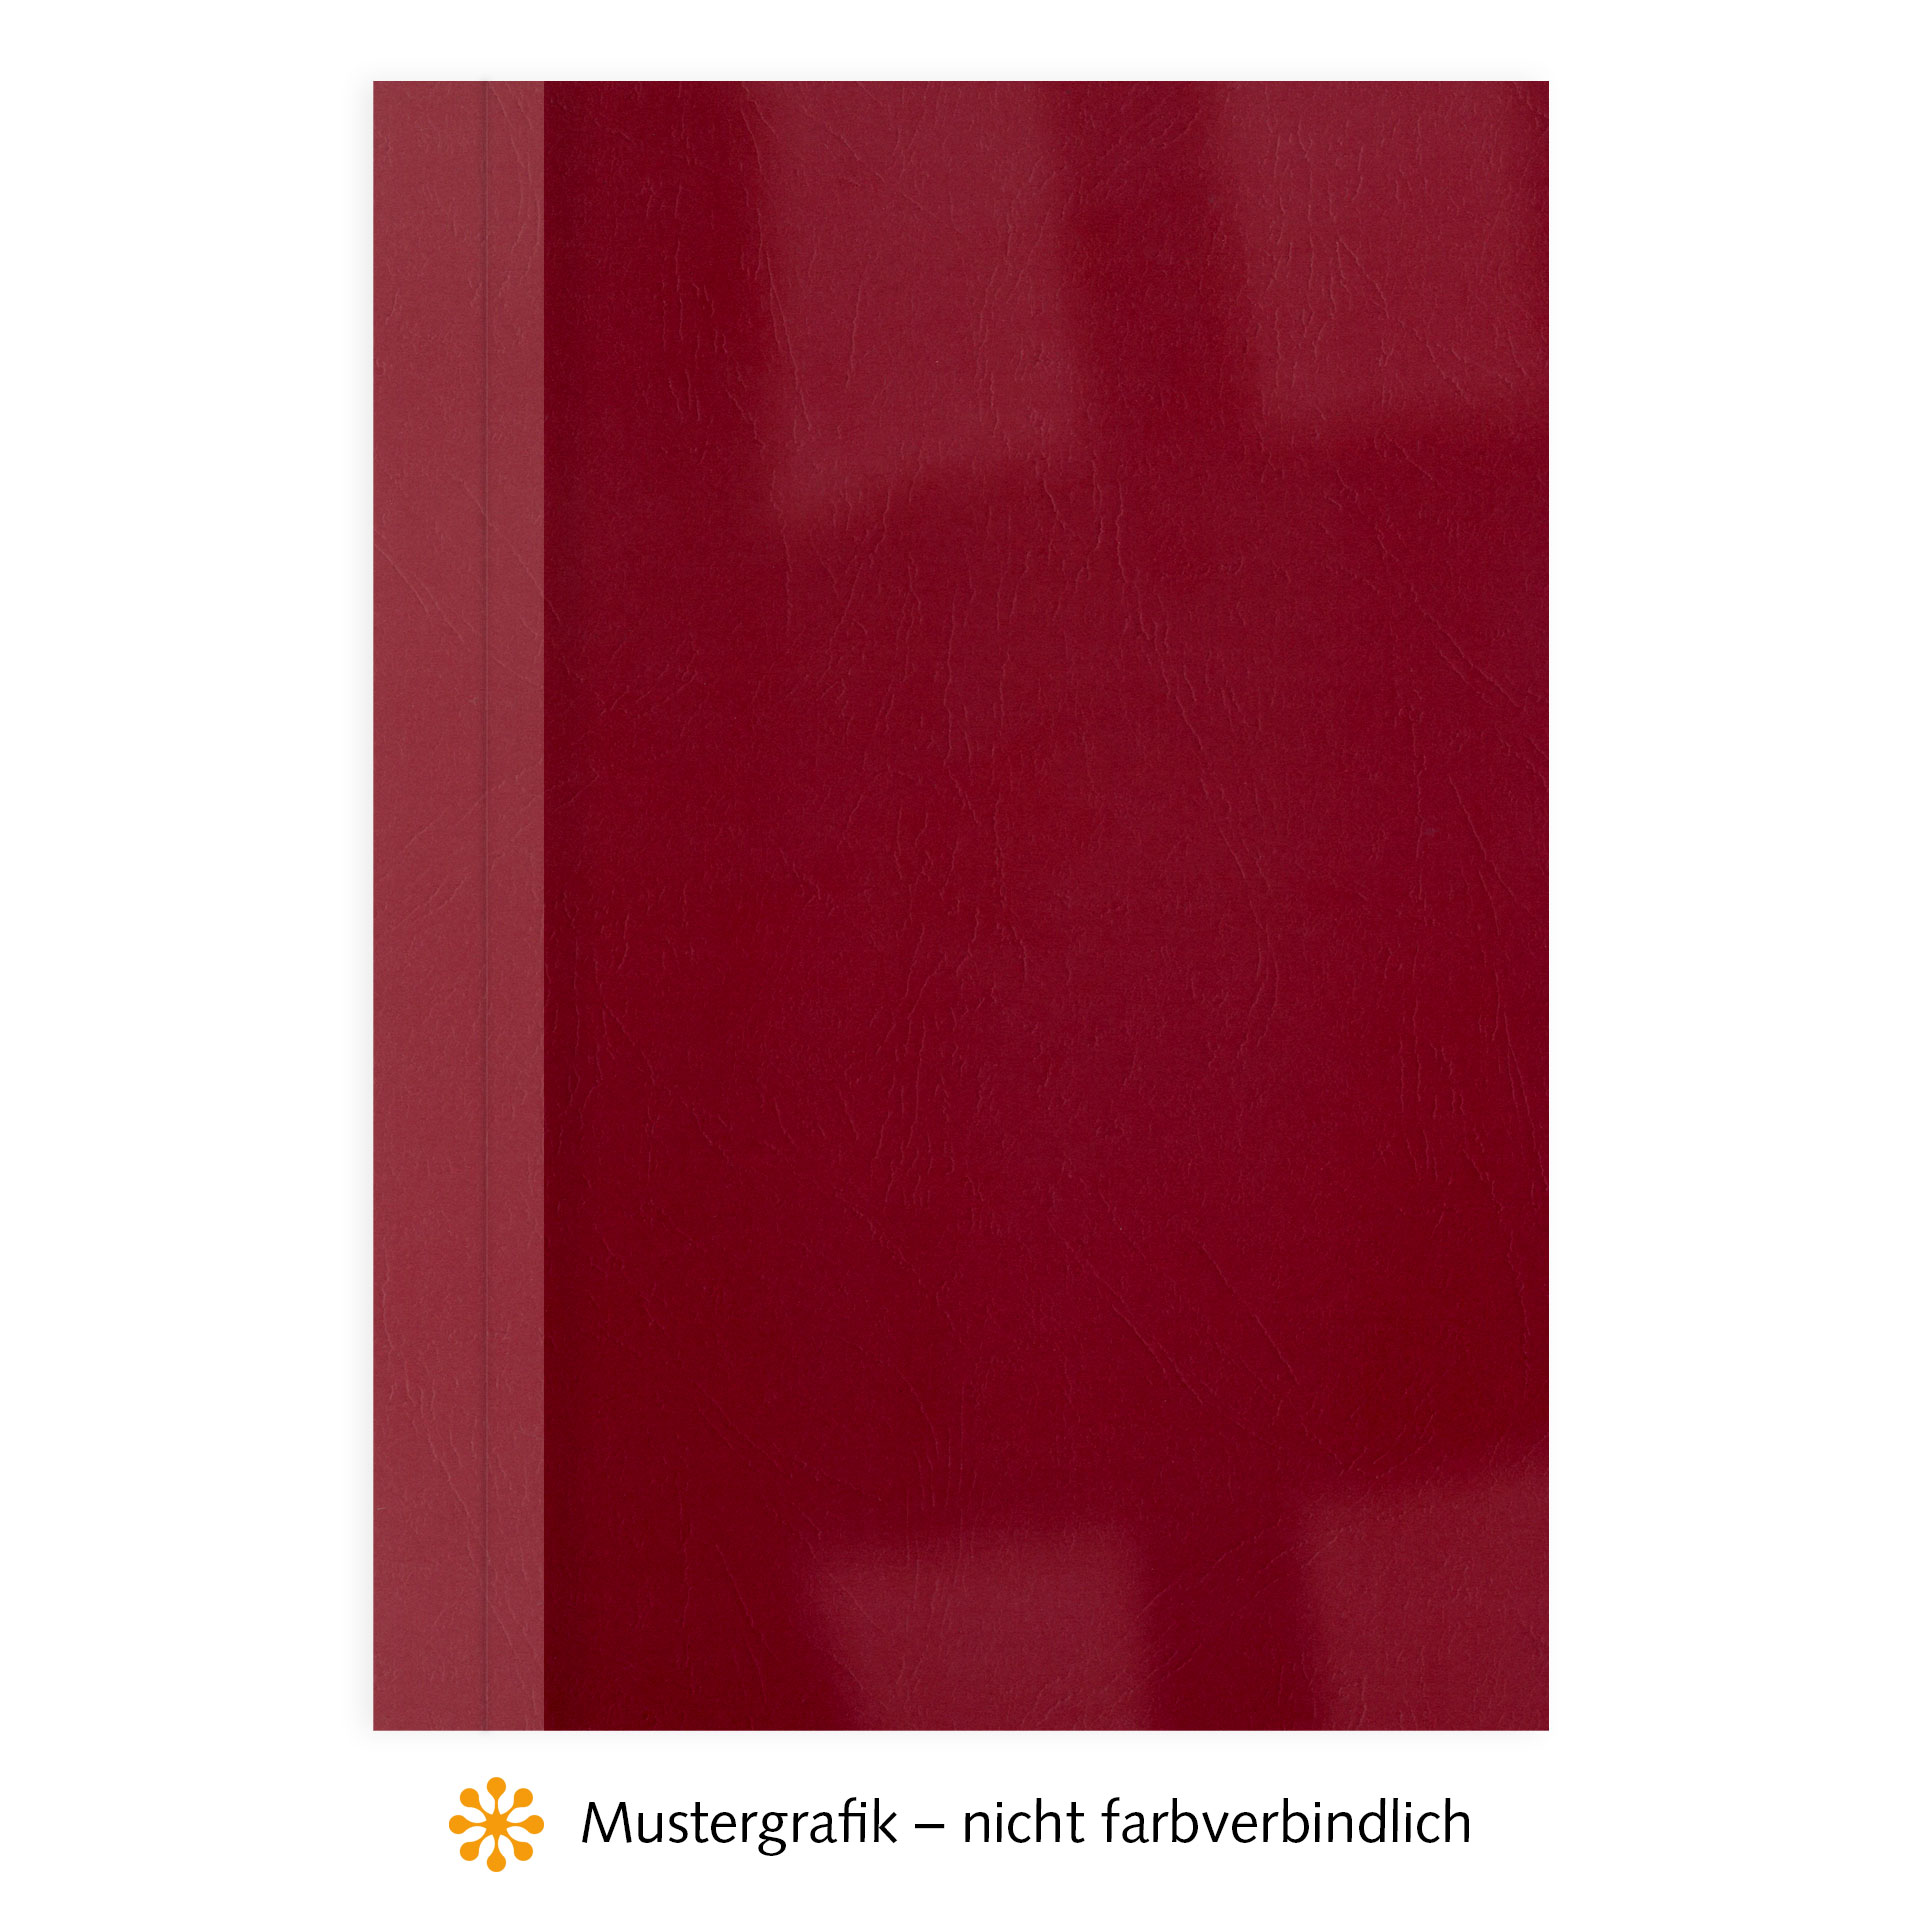 Ösenmappen DUO Cover, Vorderseite Folie KLAR transparent, Rückseite Karton Leder, Rot, 2 mm, 11 bis 20 Blatt